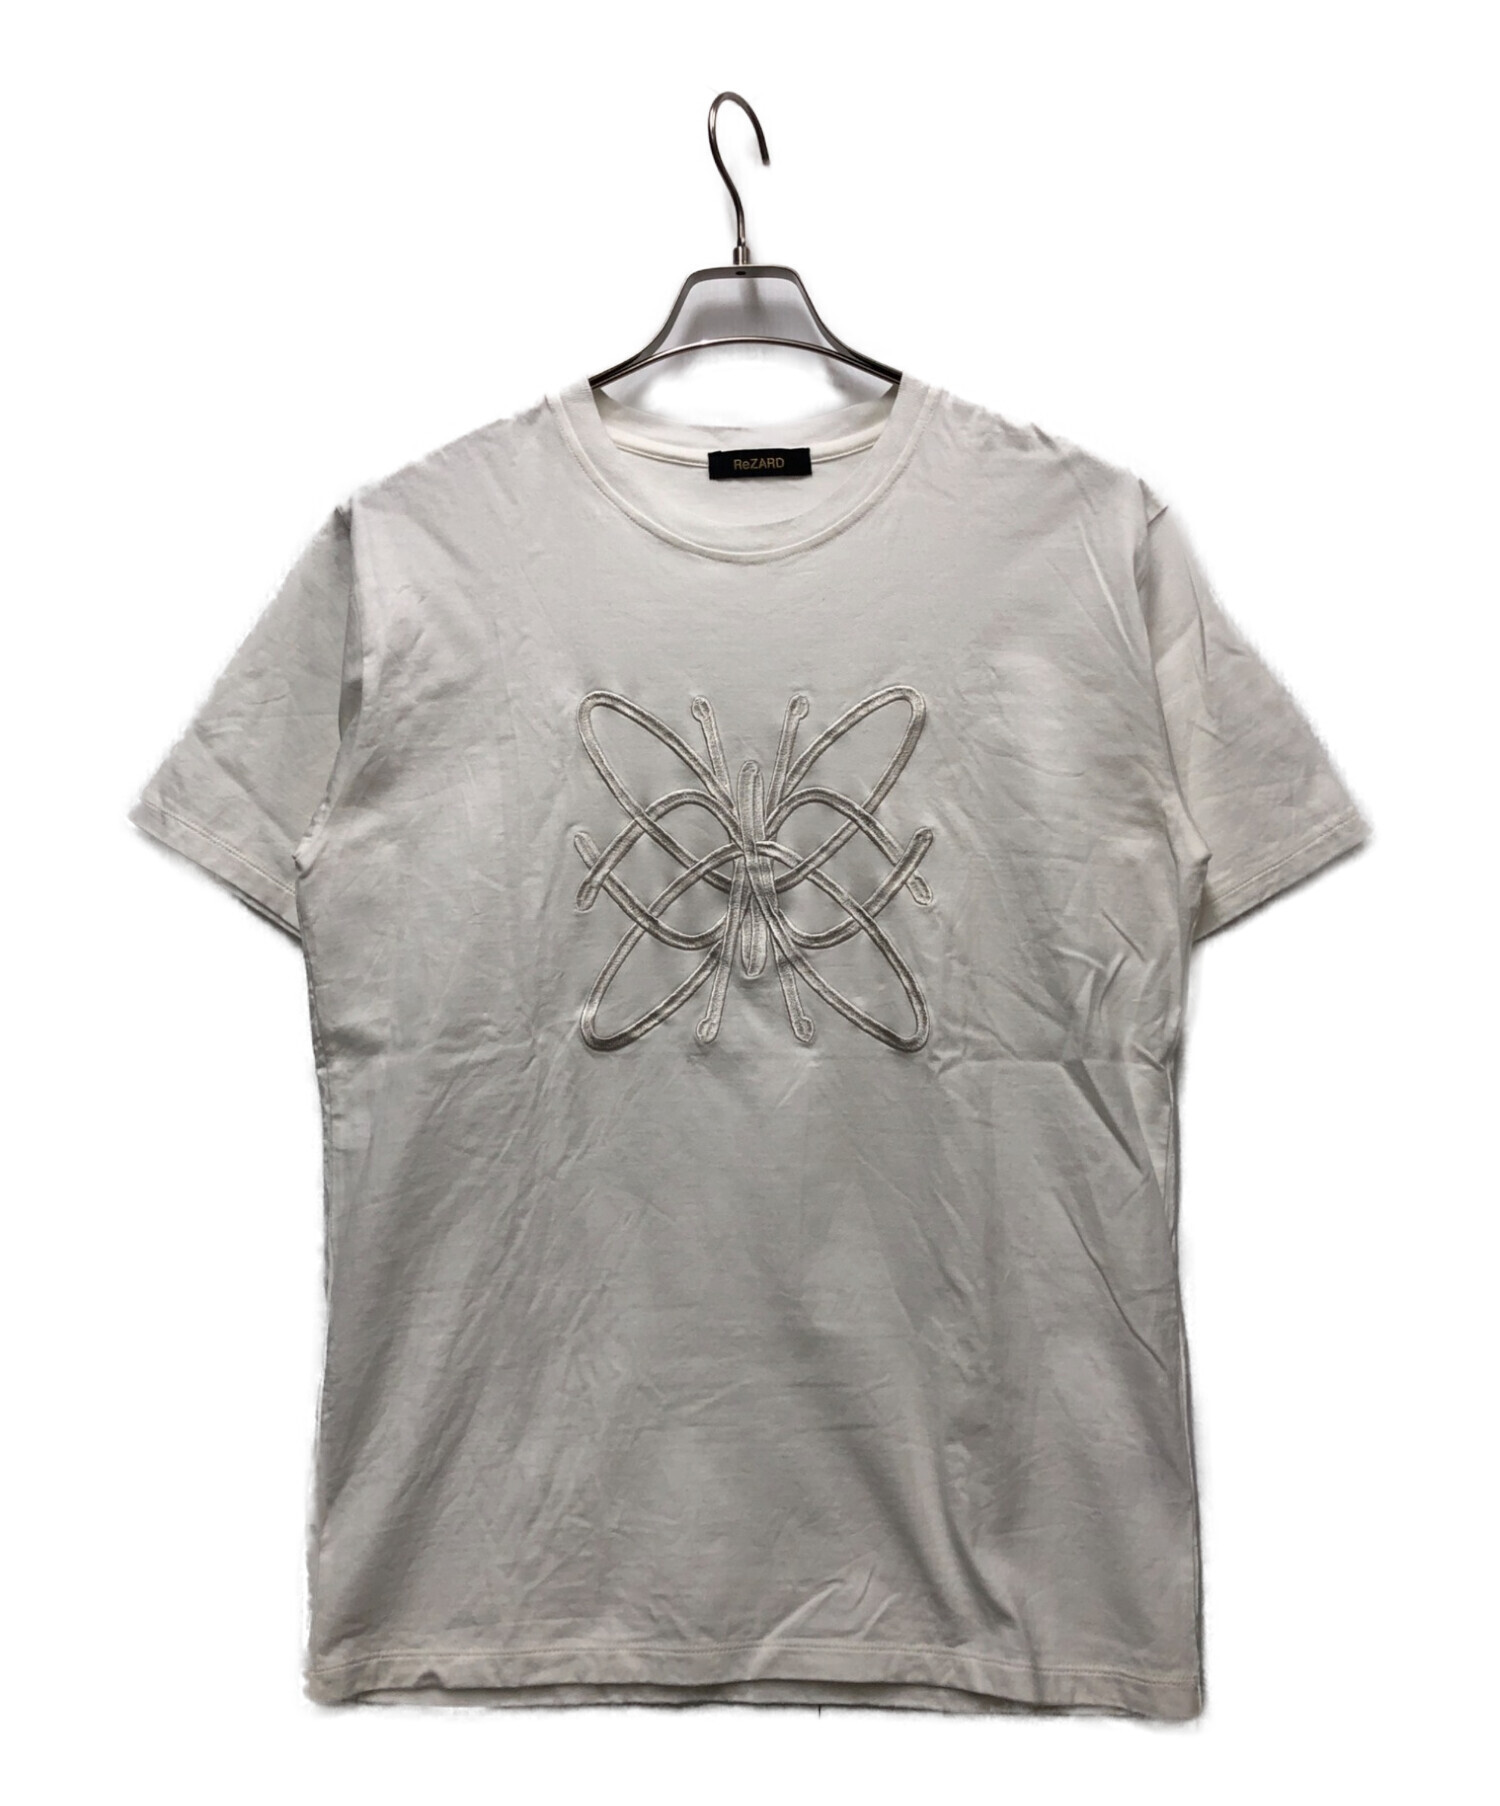 ReZARD (リザード) ロゴTシャツ ホワイト サイズ:M